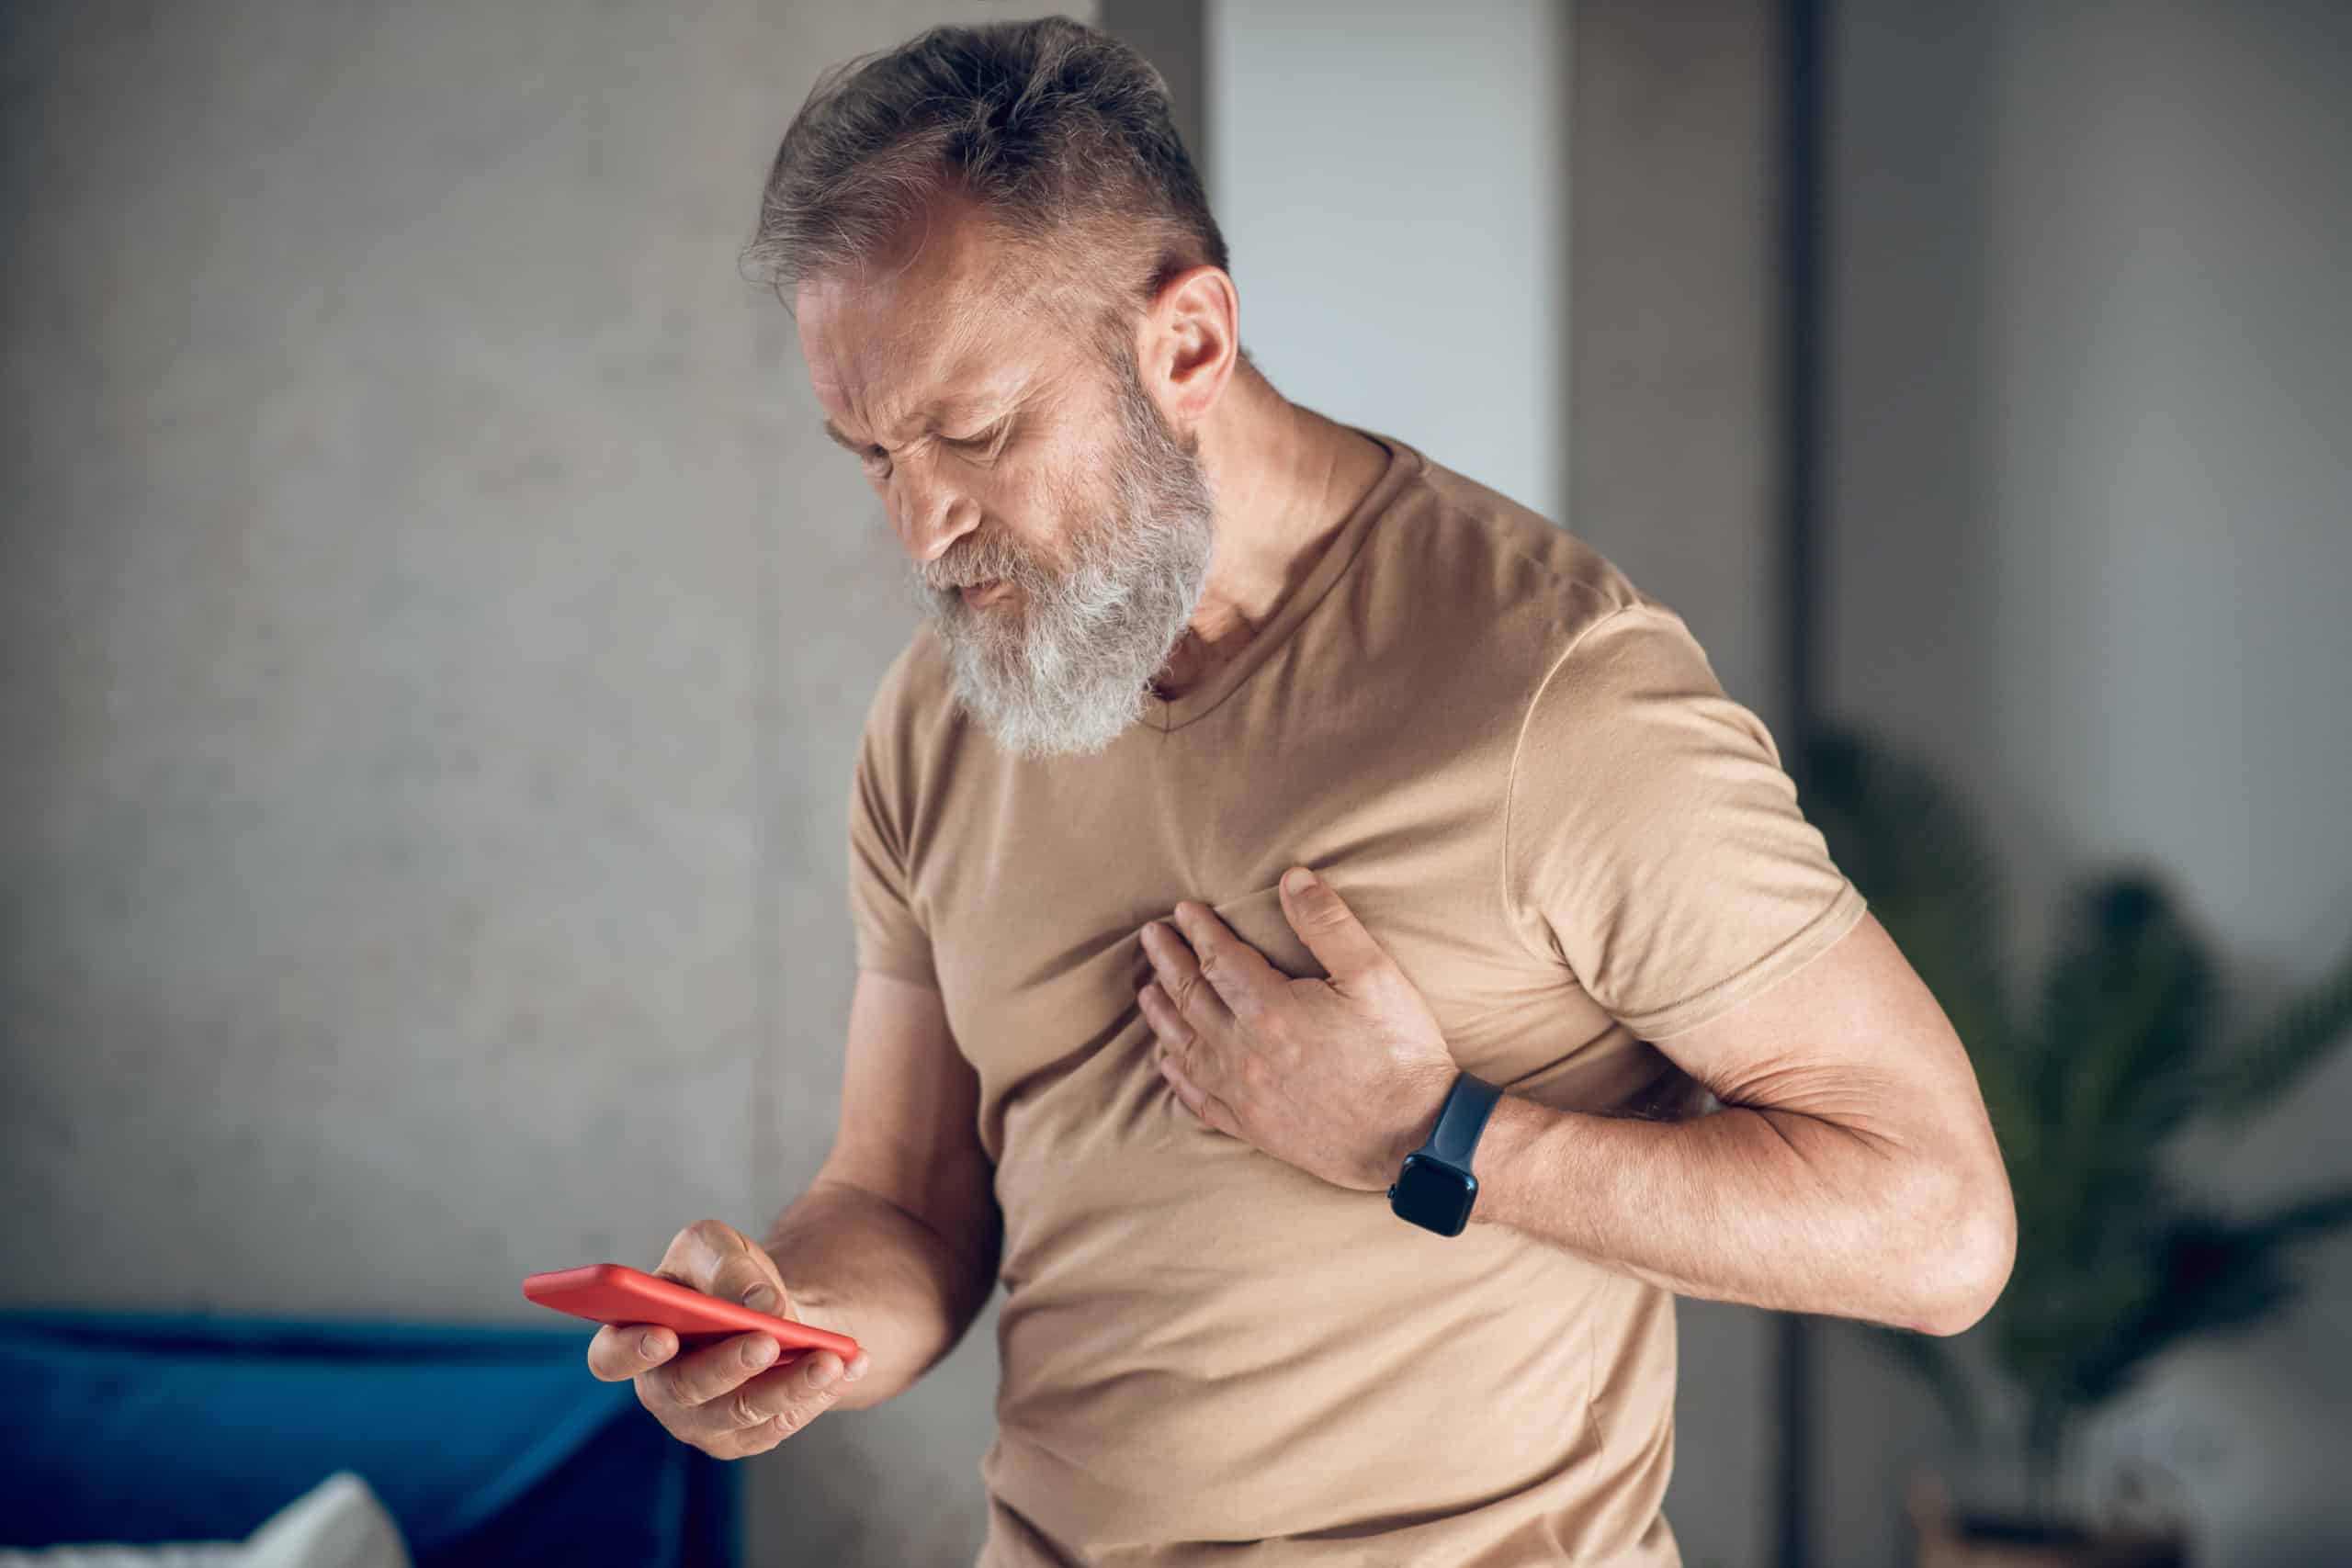 Heart Attack Misdiagnosis Evidence